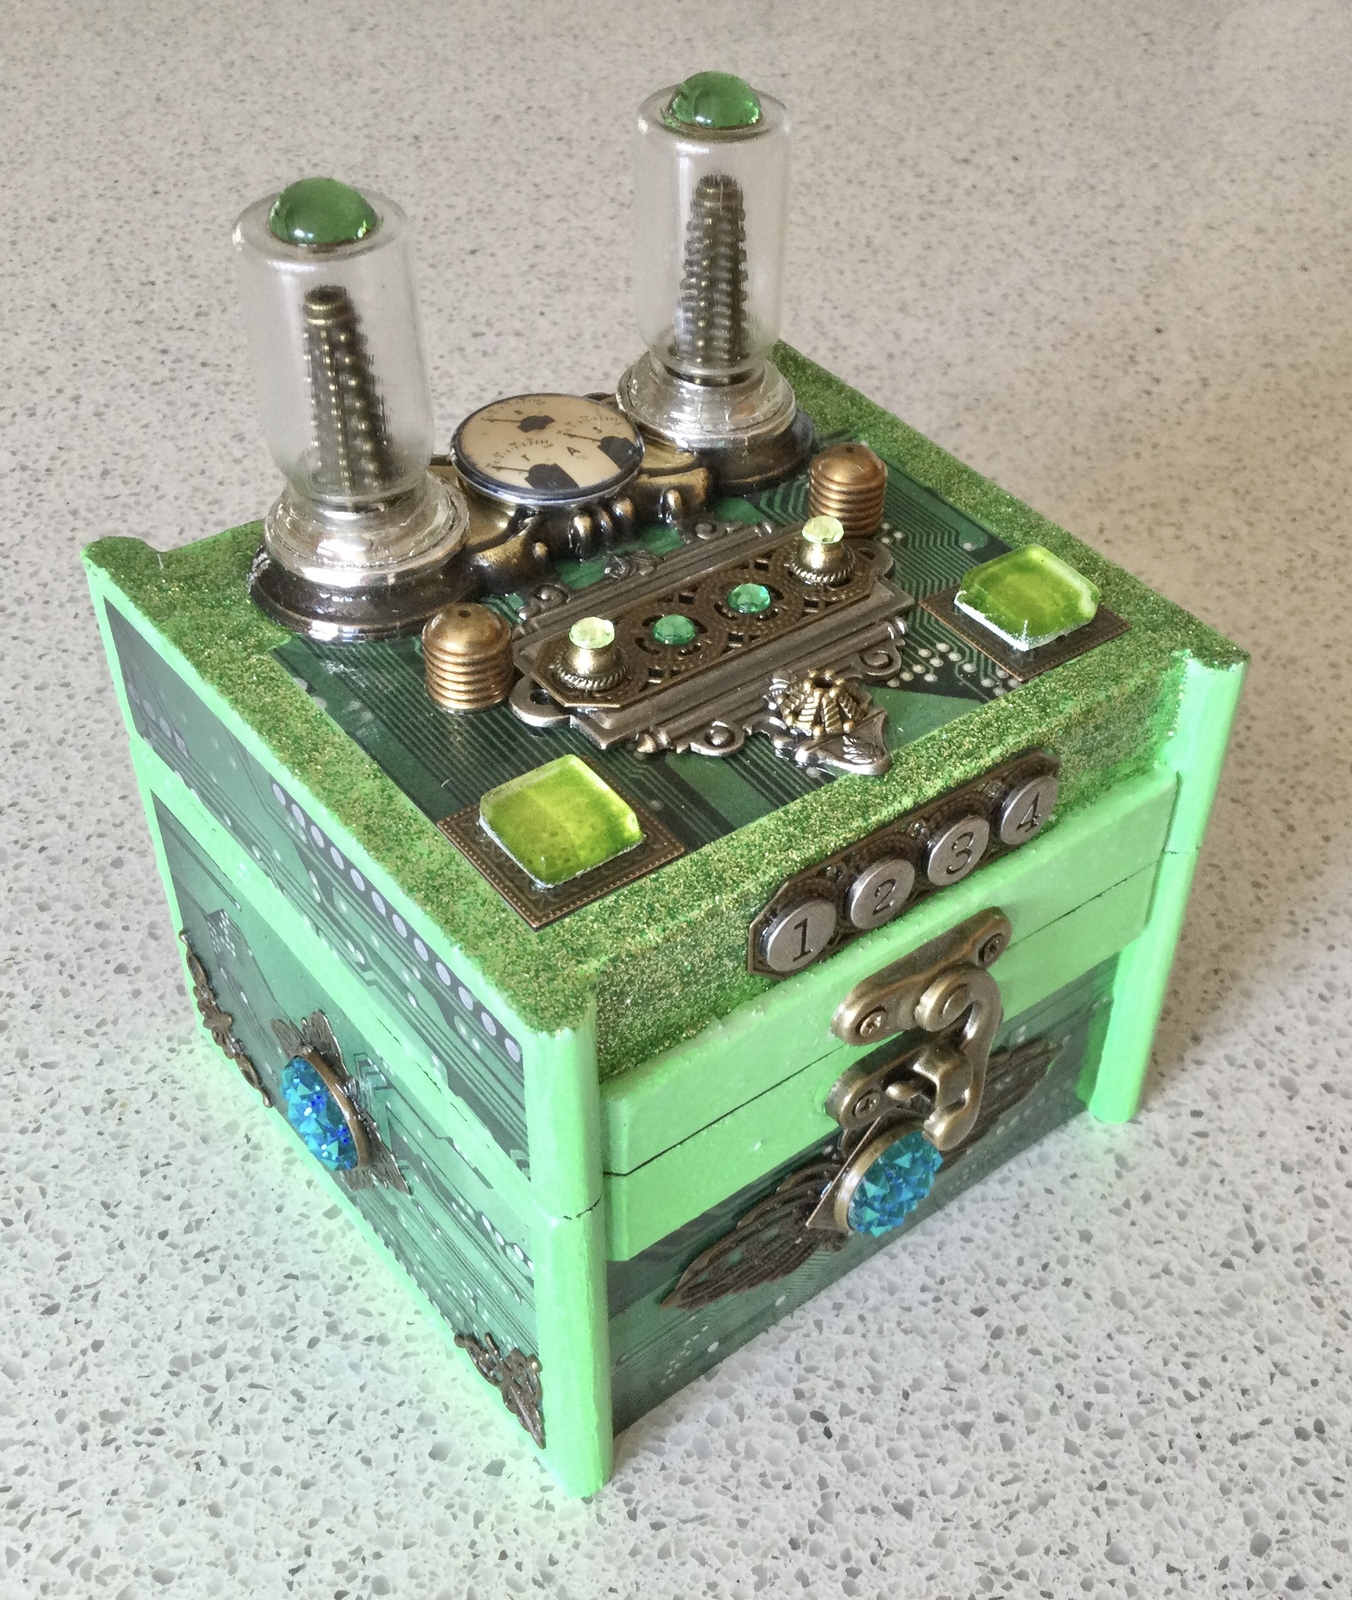 Circuit Board Style TechnoPunk Trinket Box 2 - $50.00